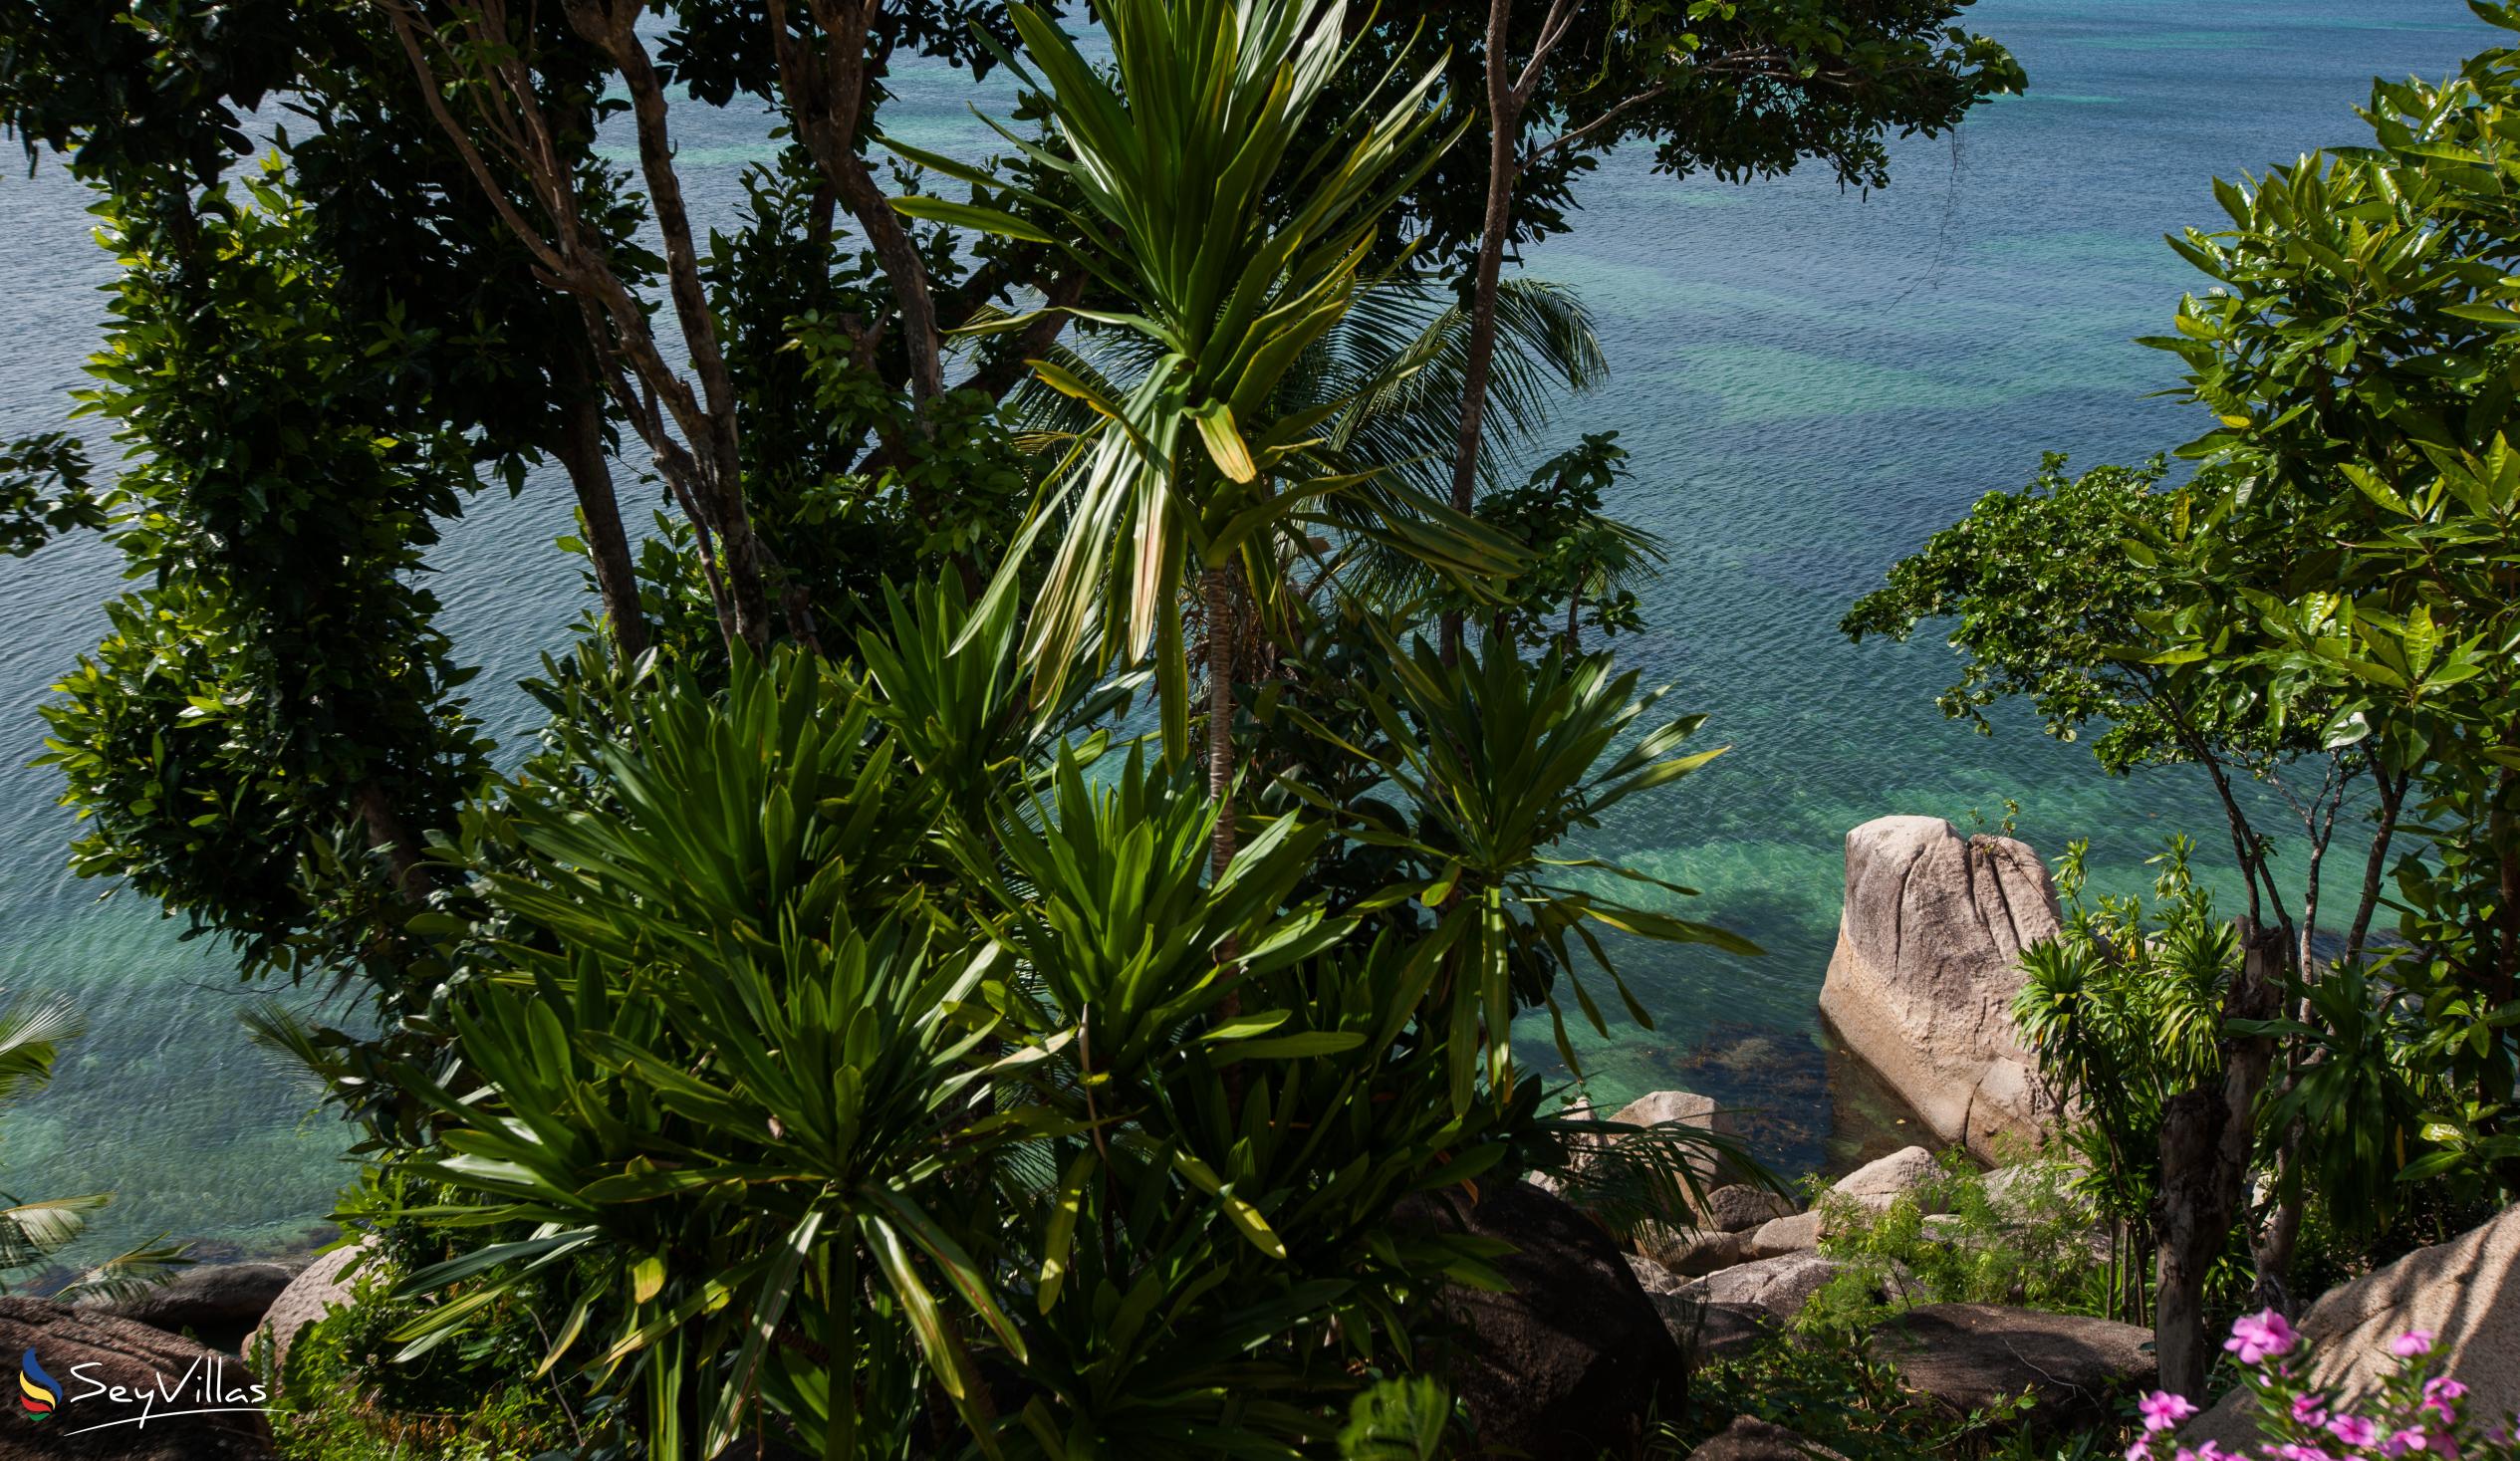 Foto 47: Coco de Mer & Black Parrot Suites - Lage - Praslin (Seychellen)